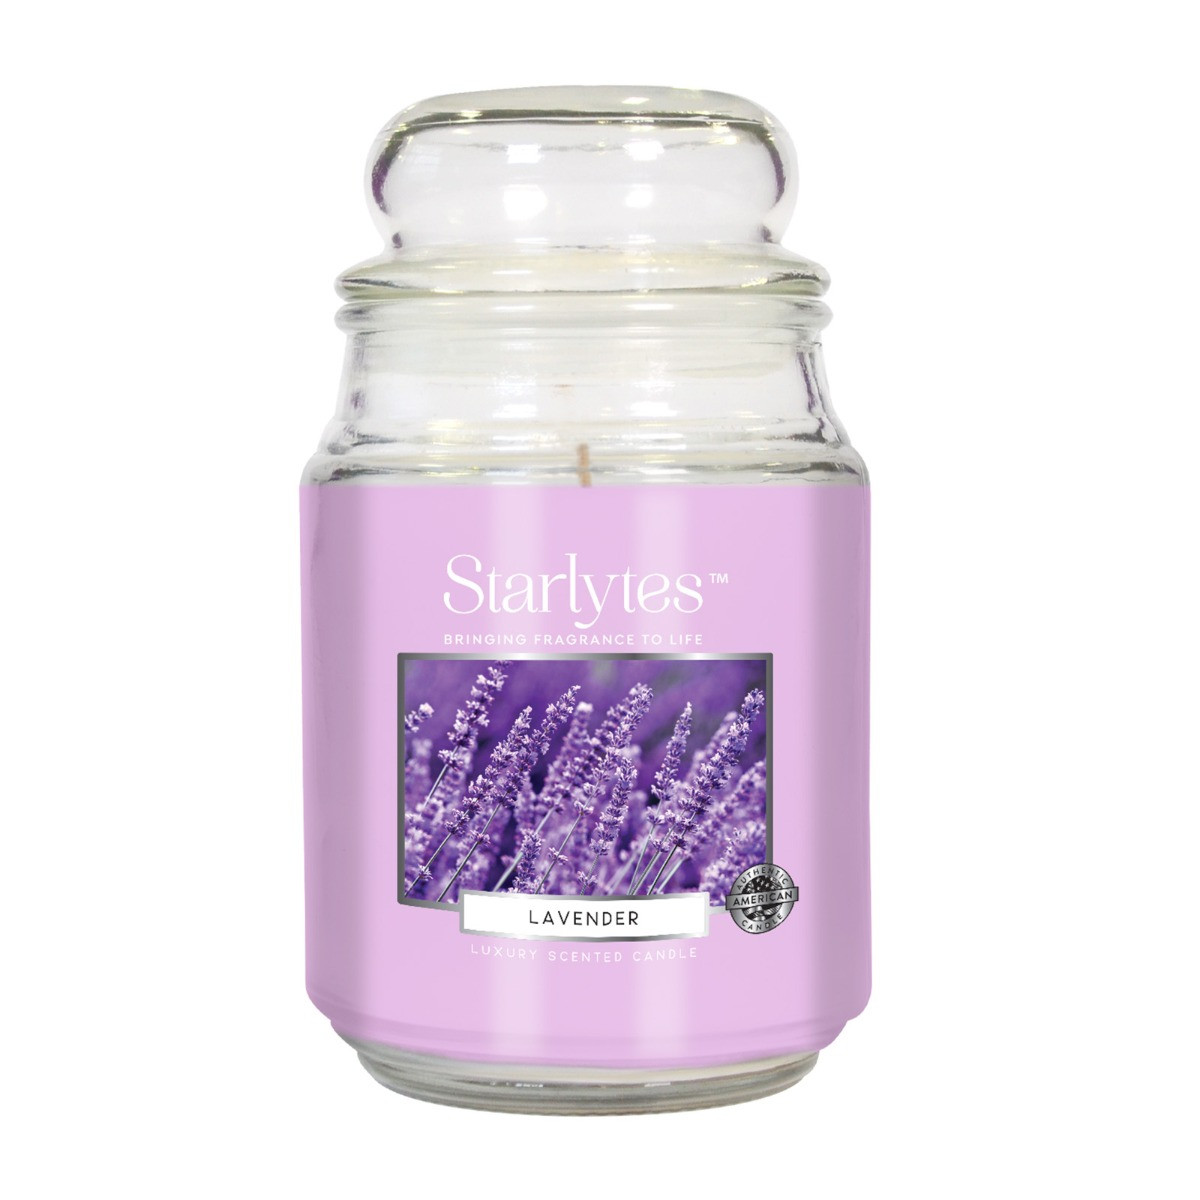 Starlytes 18oz Jar Candle - Lavender>